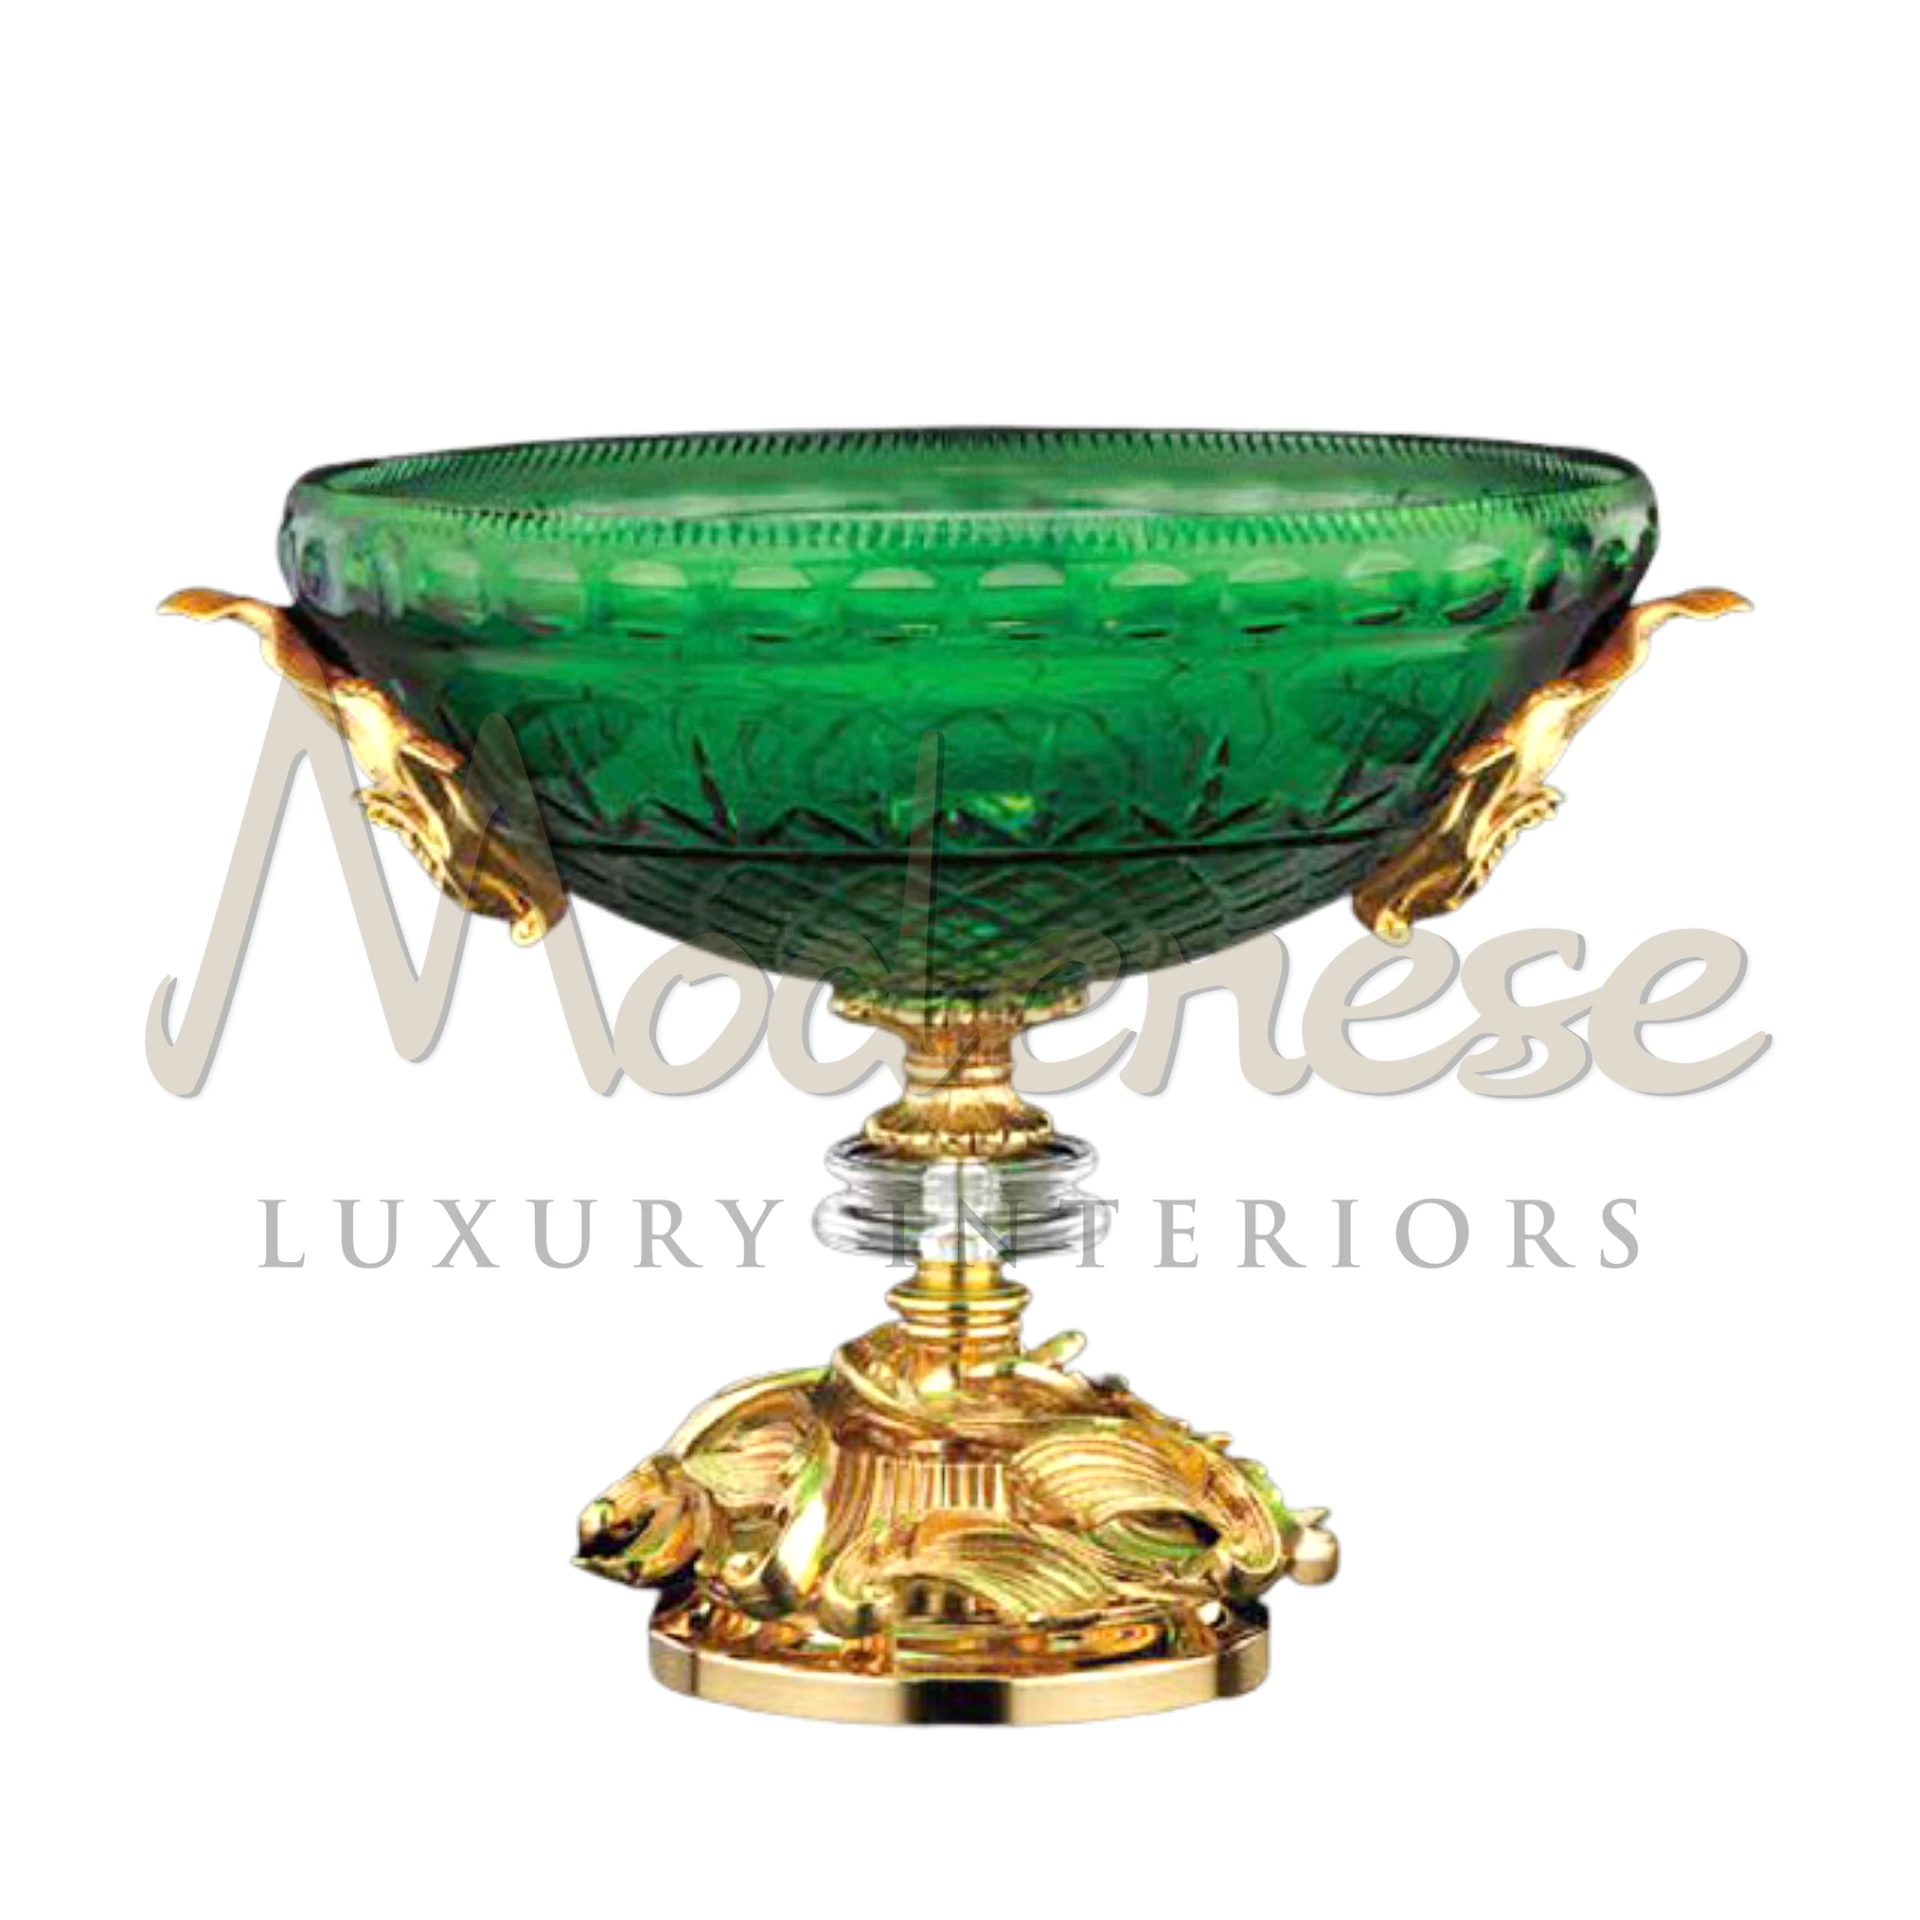 Decorative Stylish Green Glass Bowl - Perfect addition for interior decor.